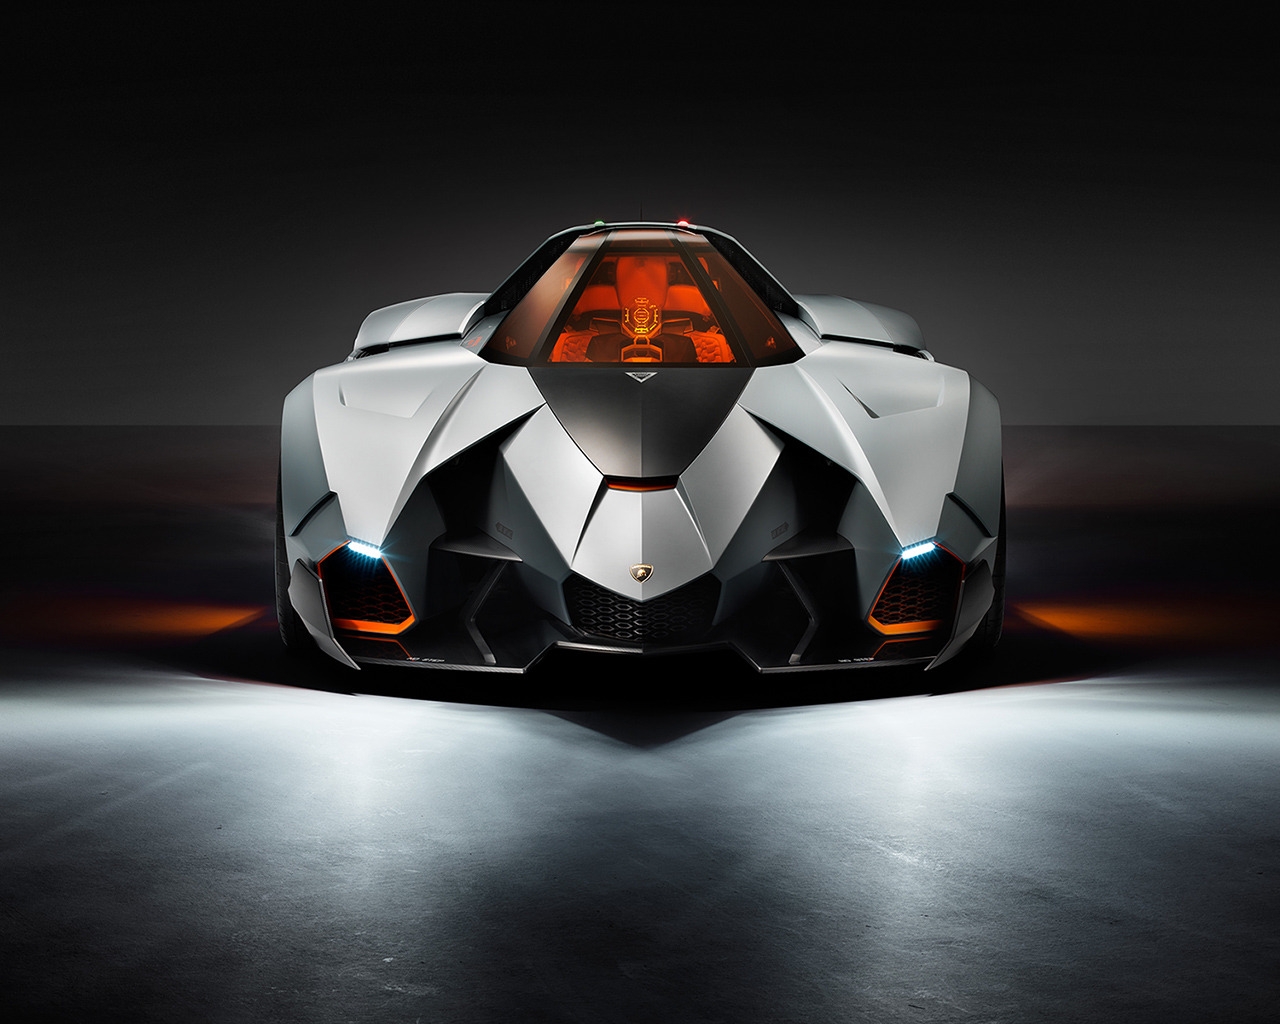 Lamborghini Egoista Front for 1280 x 1024 resolution